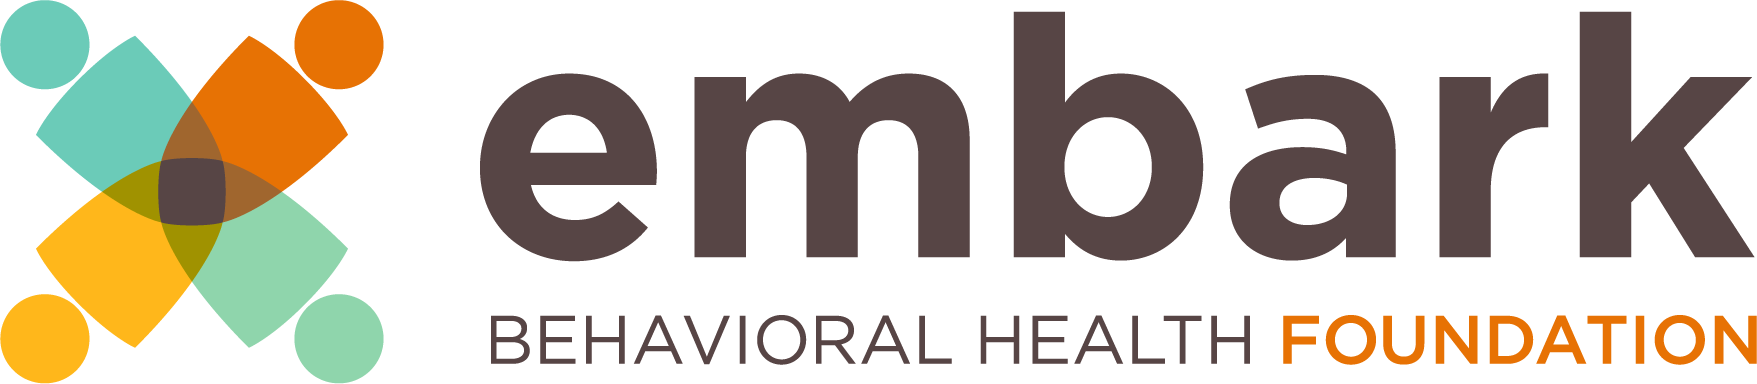 Embark Behavioral Health Foundation logo